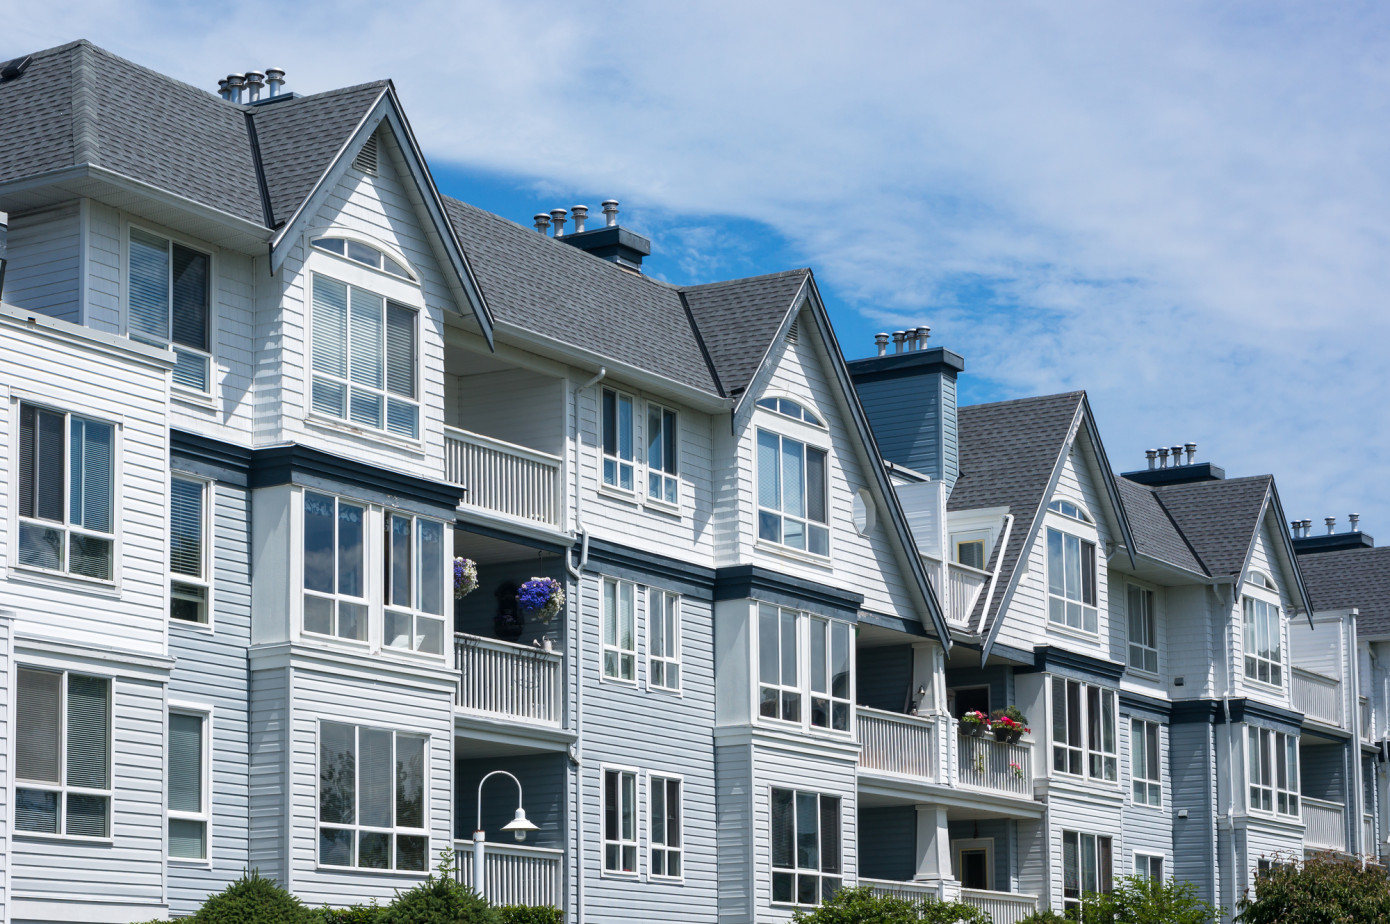 Purpose-built rental homes in British Columbia increased by 10.8% in 2022